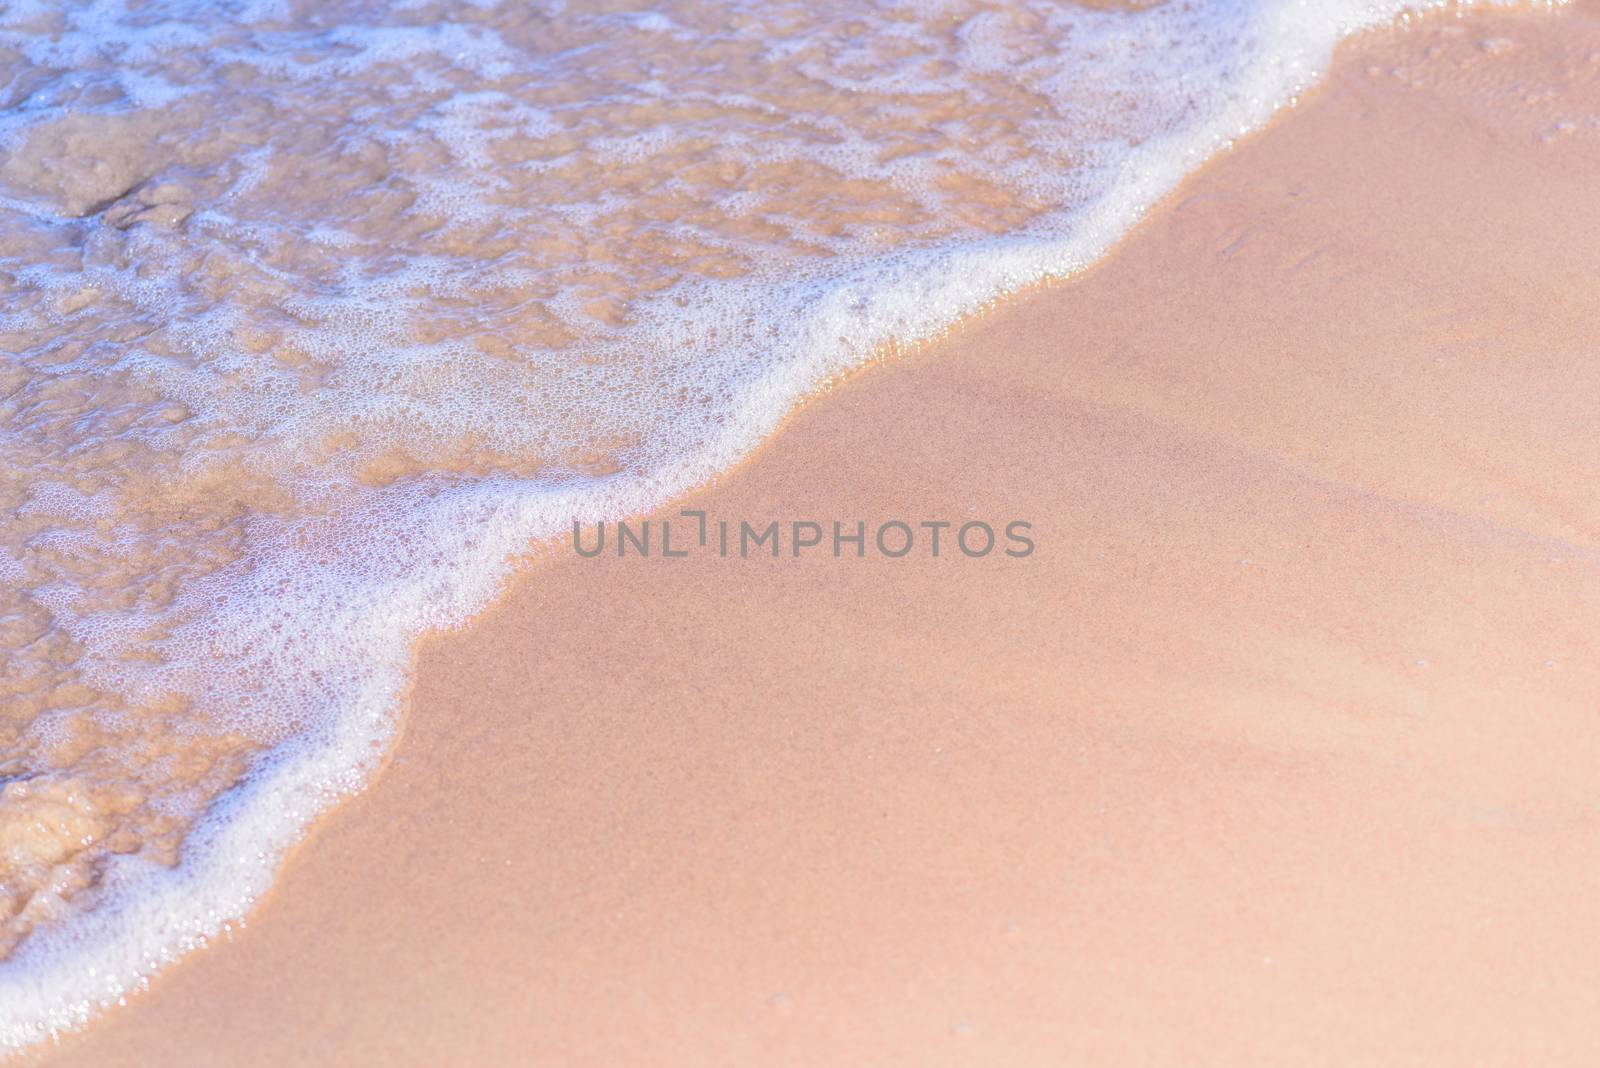 Waves on sandy beach by styf22